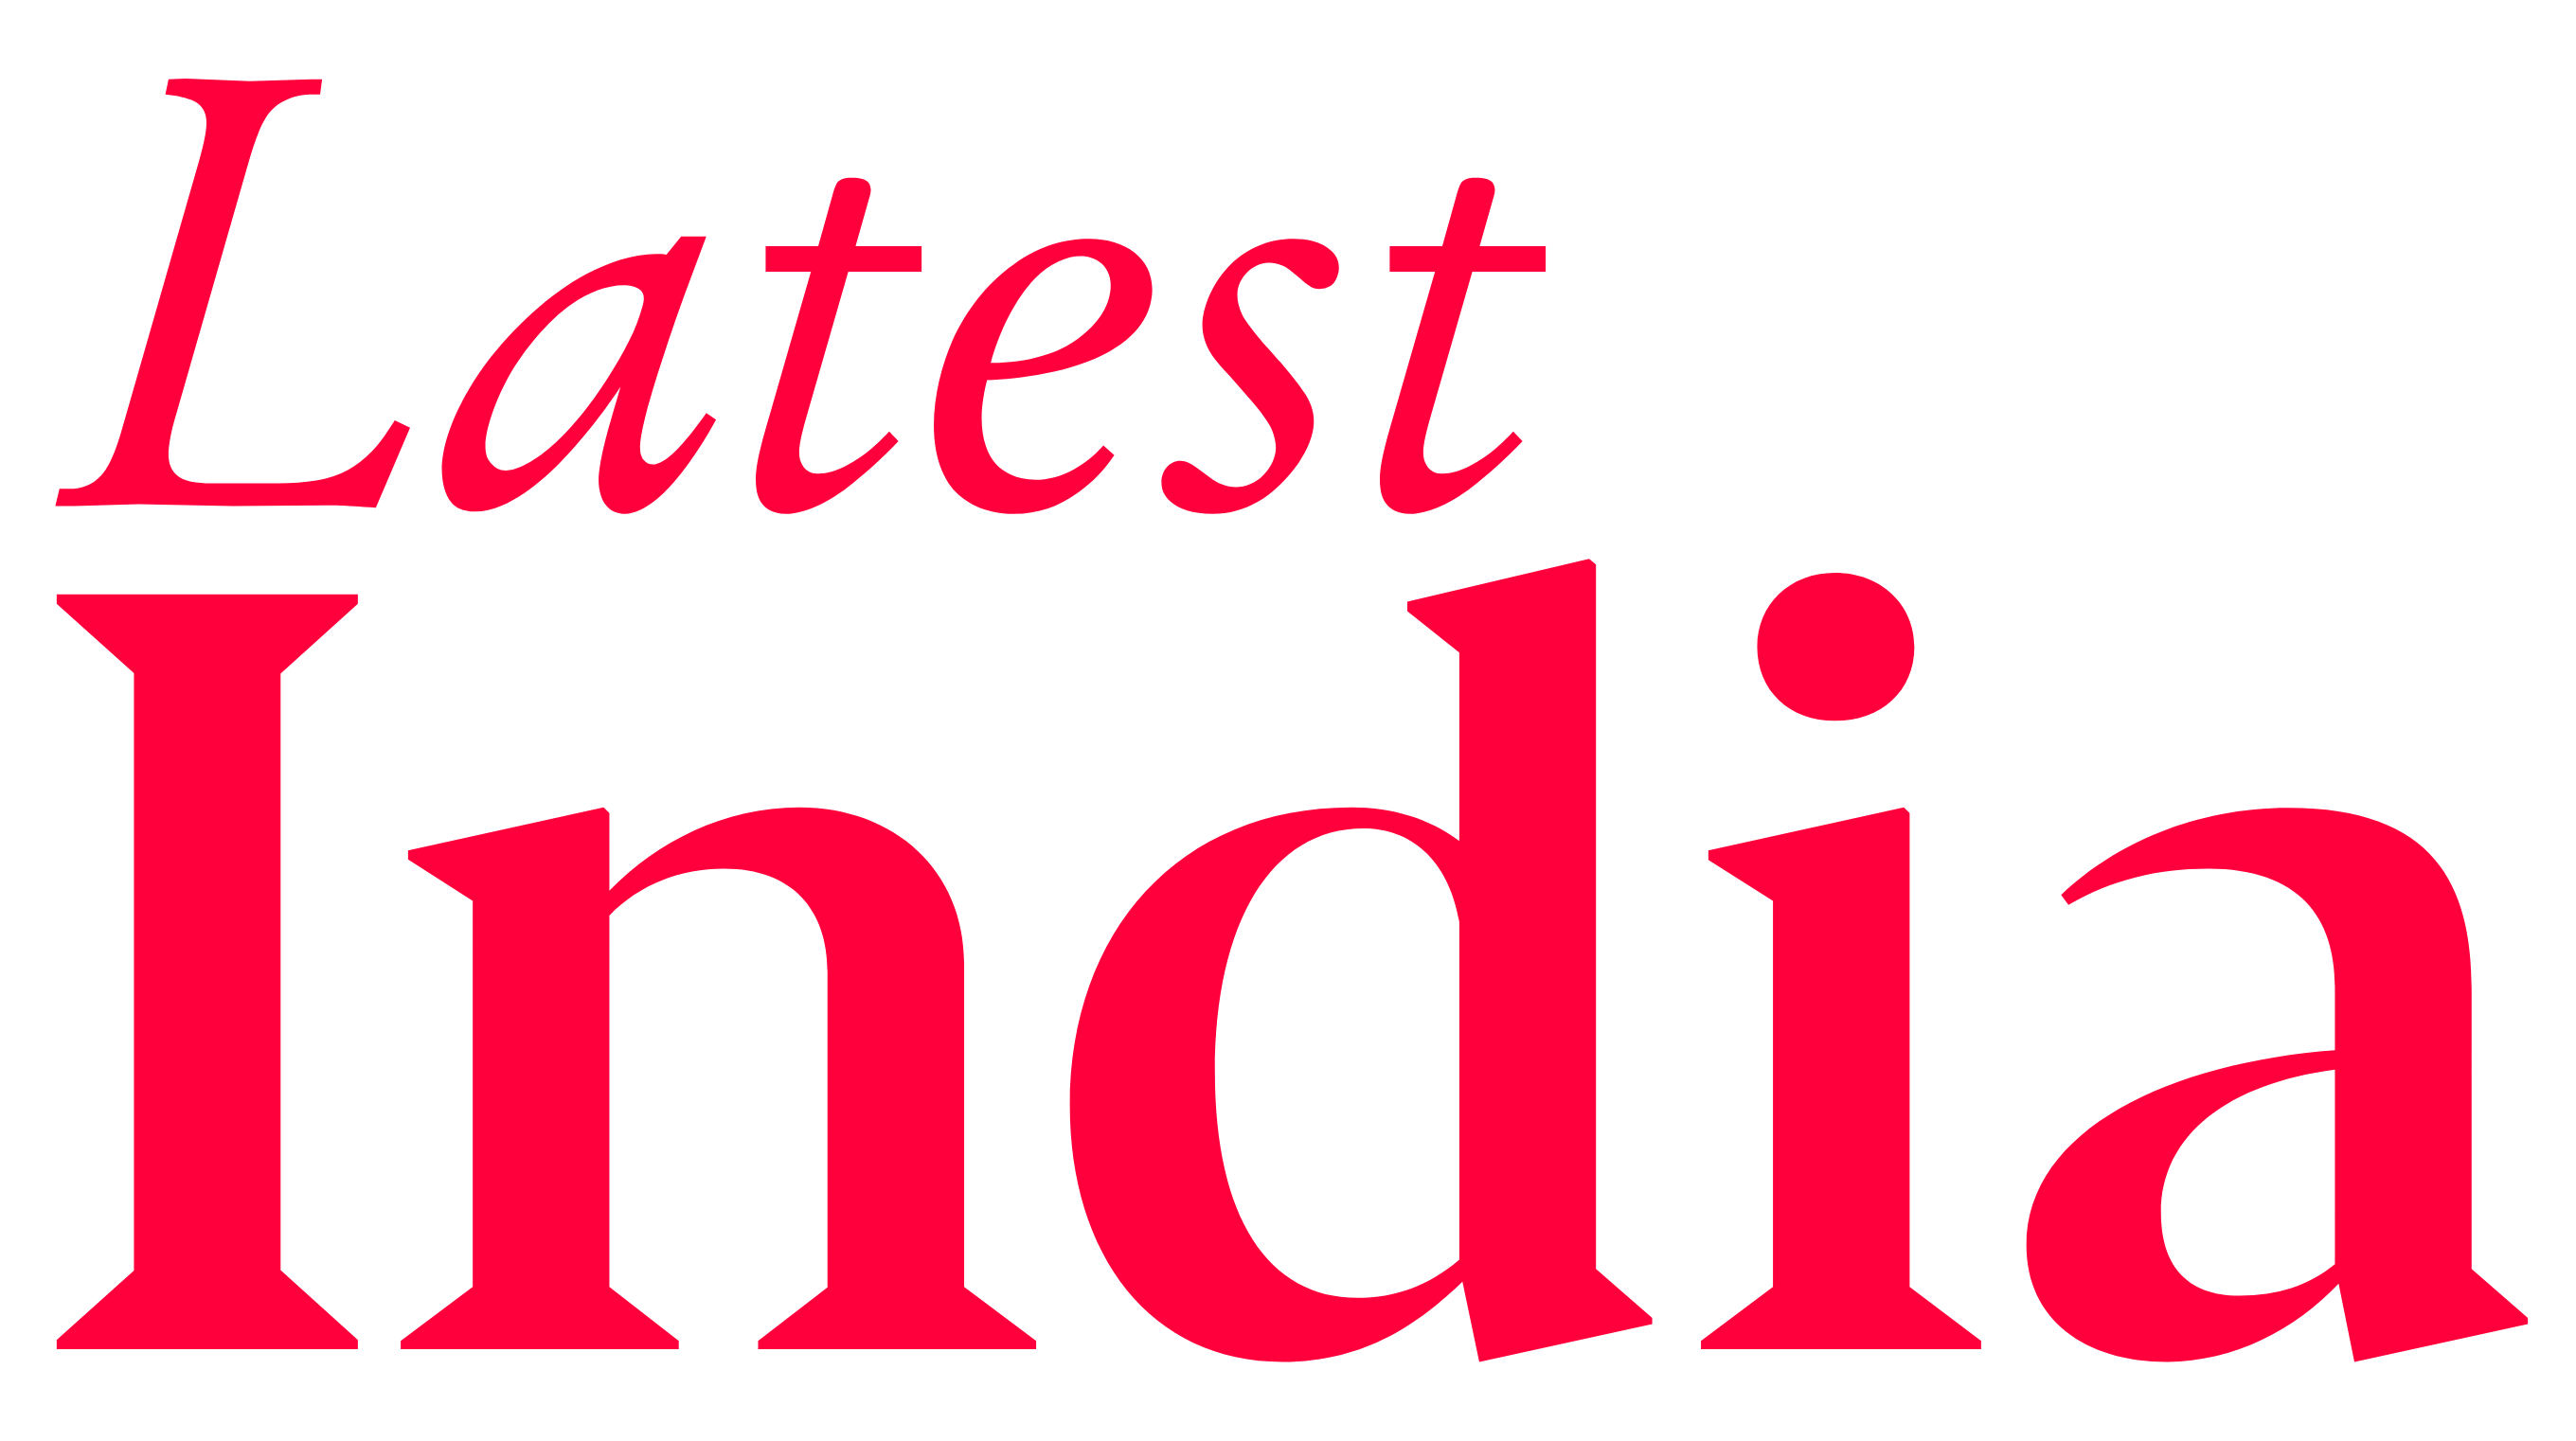 latestindia logo